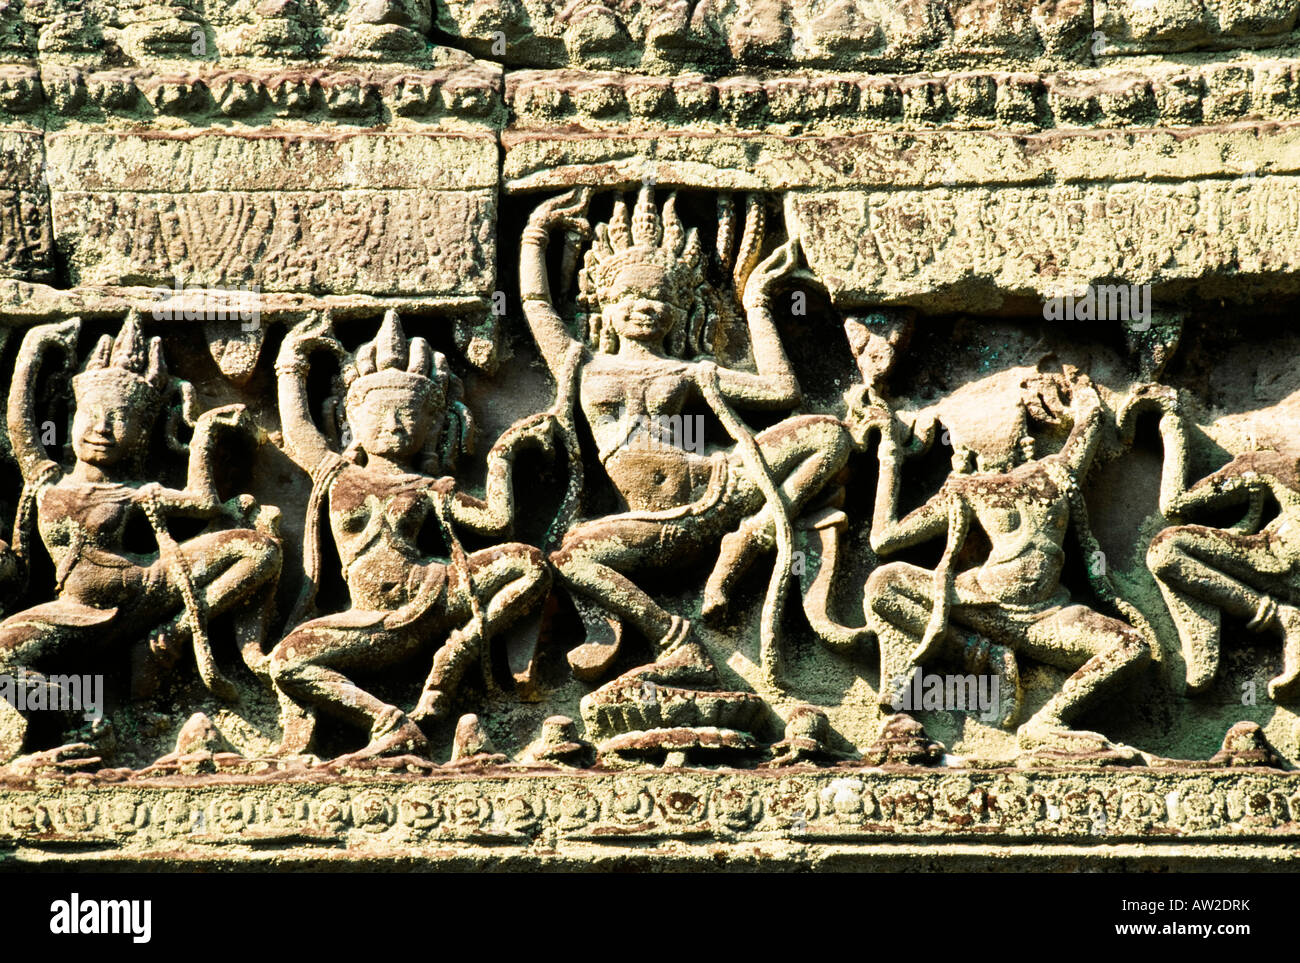 Detail of stone carvings, The Bayon, Angkor Thom, Cambodia Stock Photo